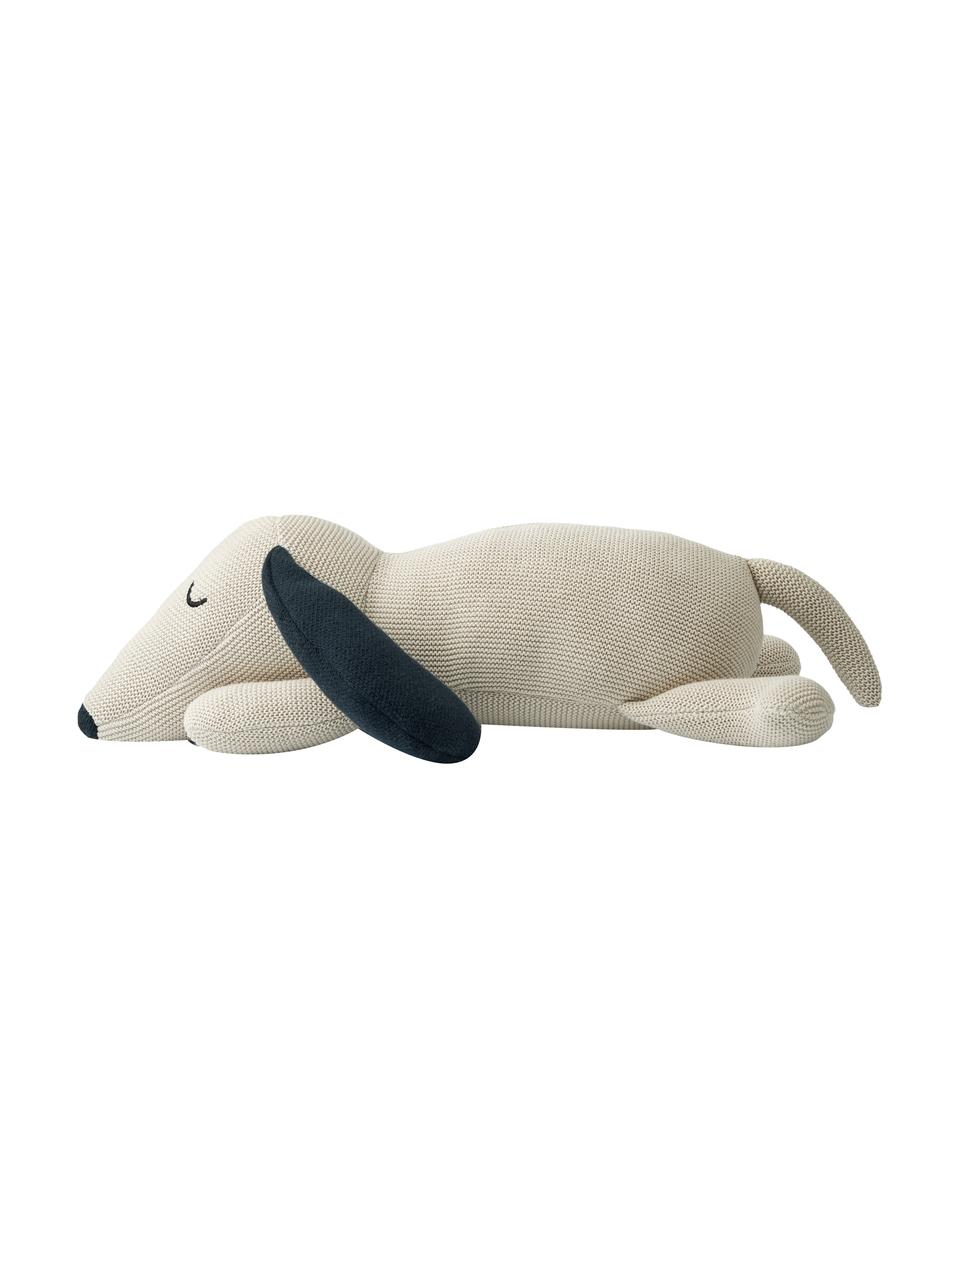 Peluche Daniel the Dog, Funda: 100% algodón, Off White, azul oscuro, An 40 x Al 14 cm